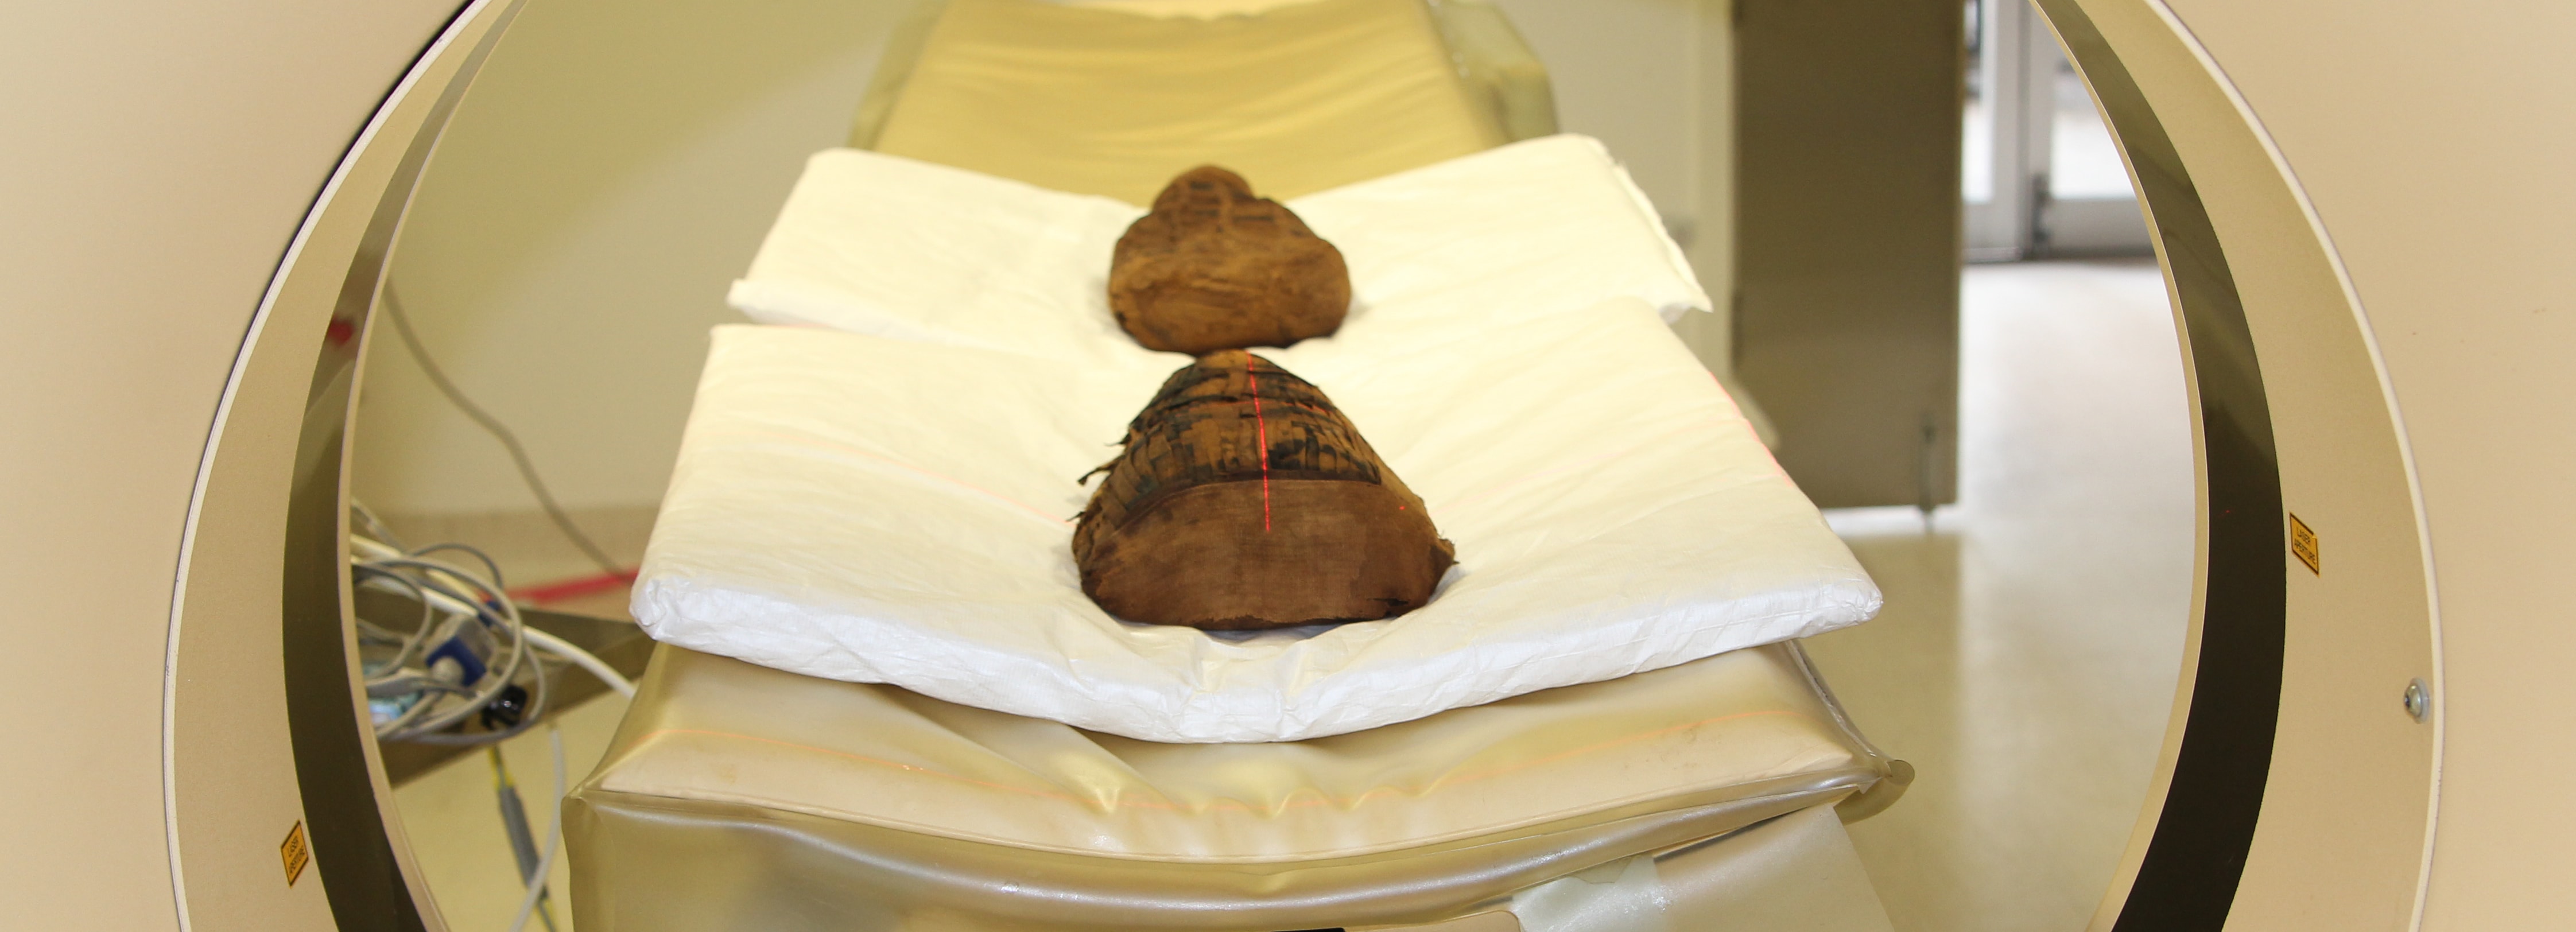 Ibis mummies being scanned